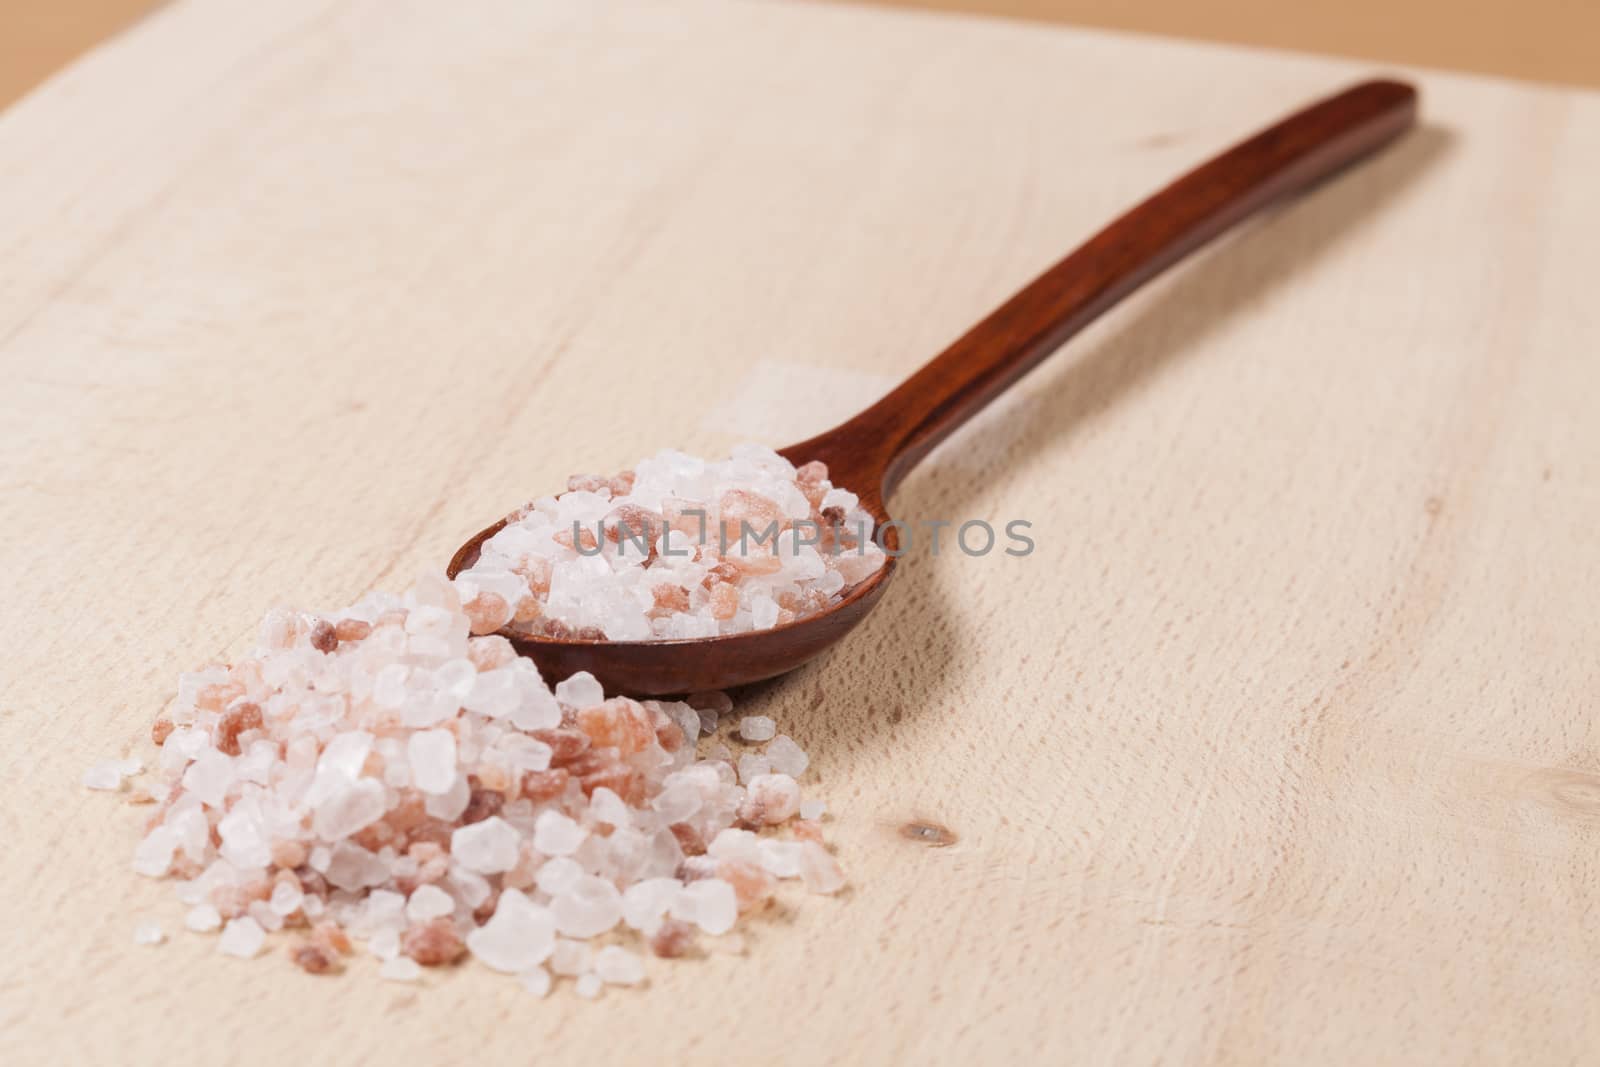 Himalayan Salt on Spoon by orcearo